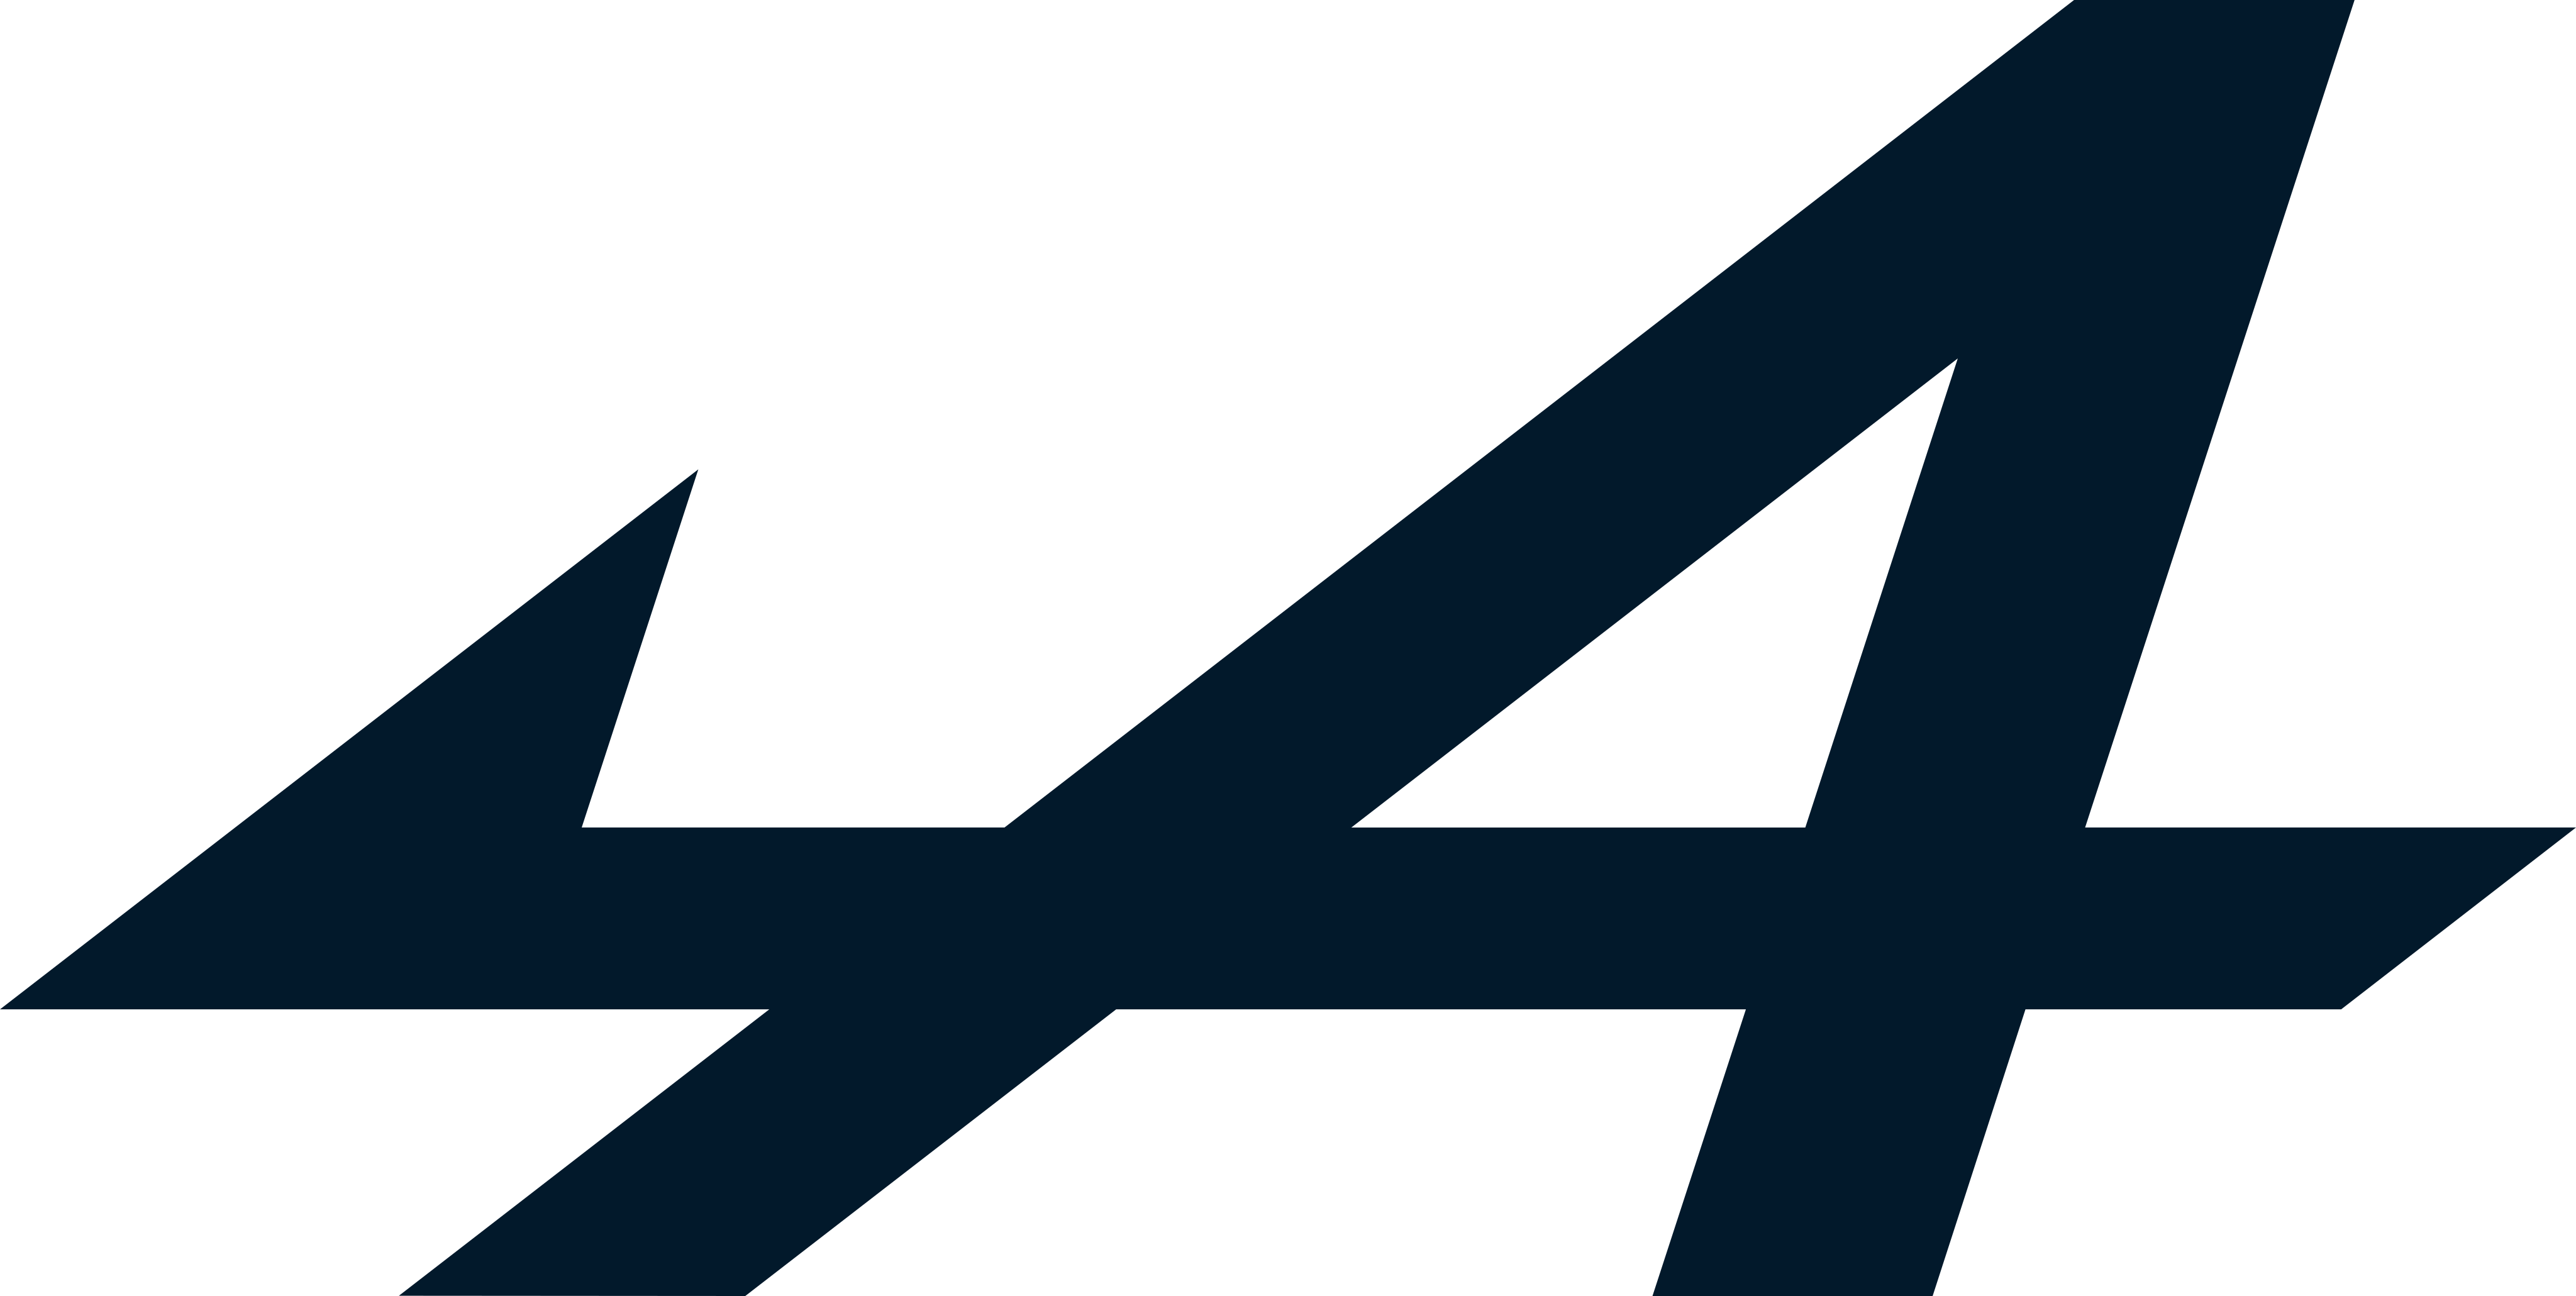 alpine f1 logo 1 - Alpine F1 Team Logo